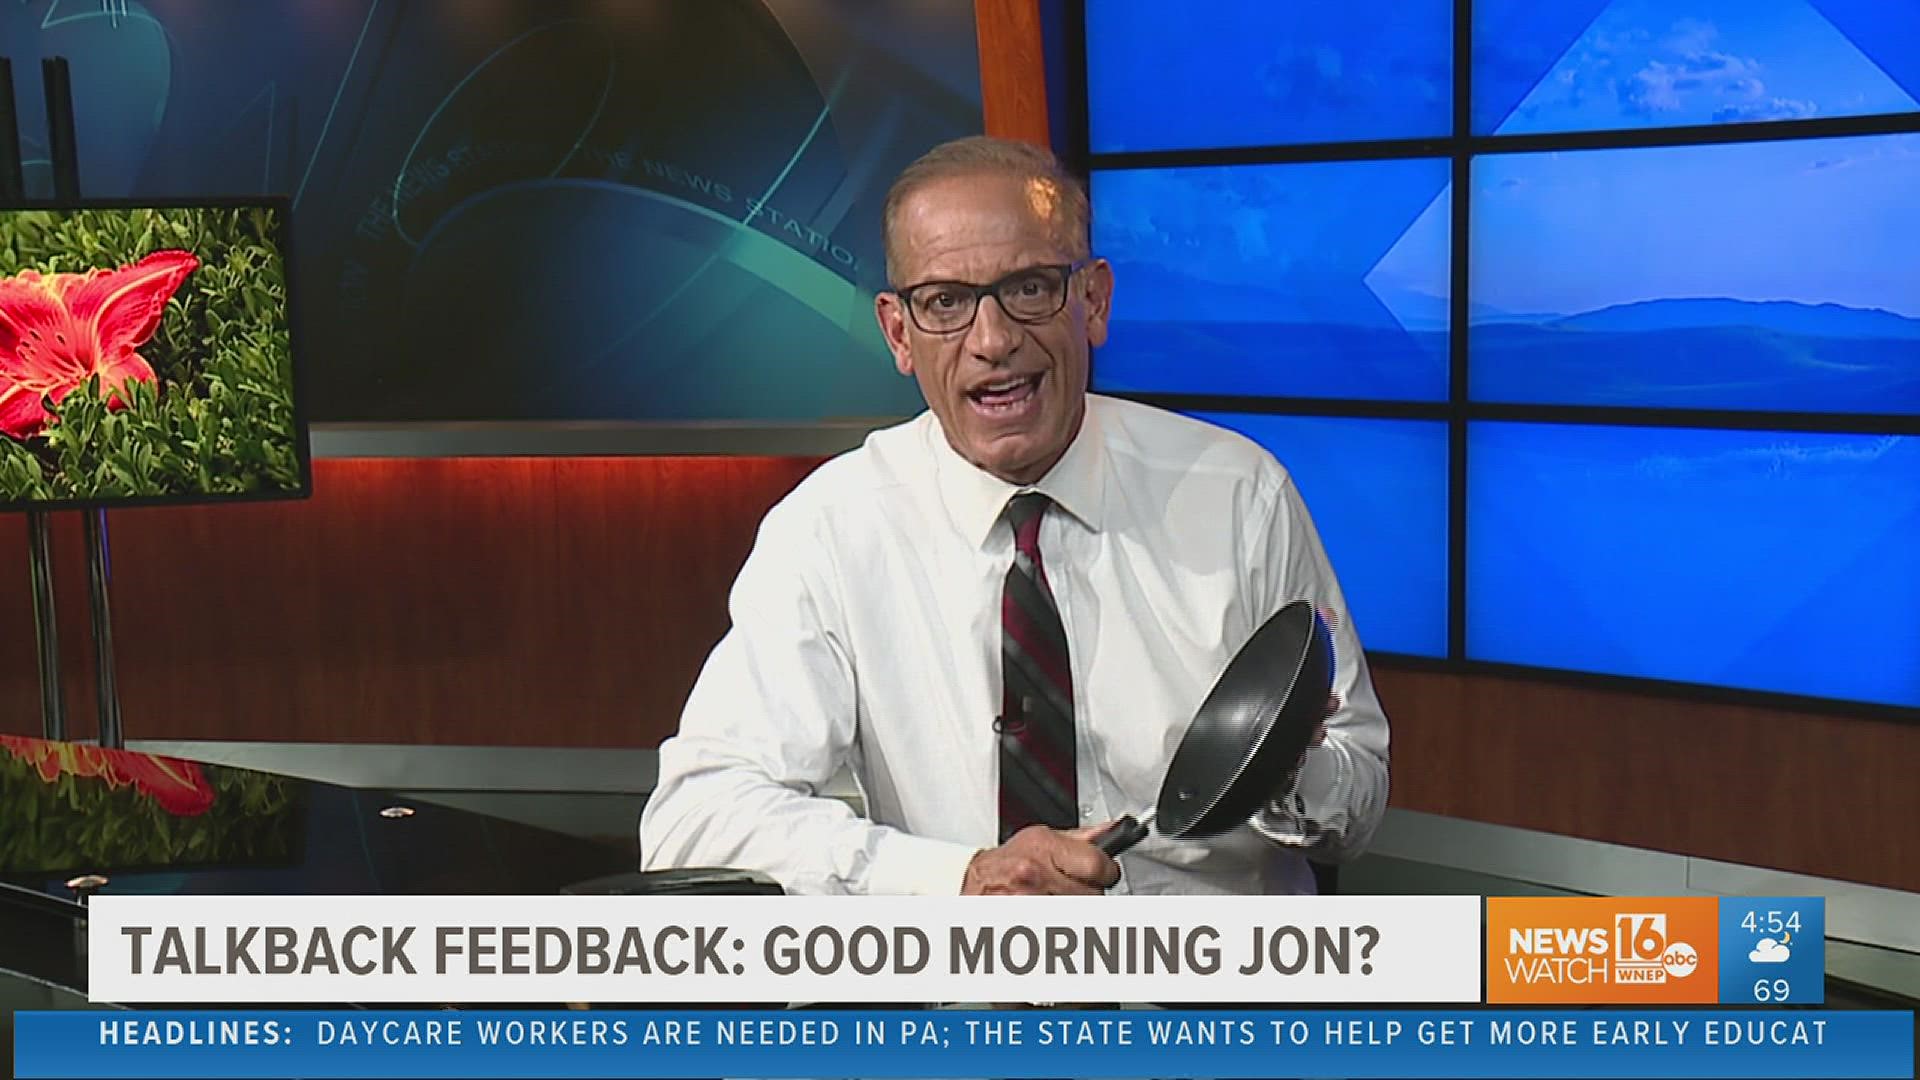 Should we still be saying, "Good Morning Jon" in this week's Talkback Feedback